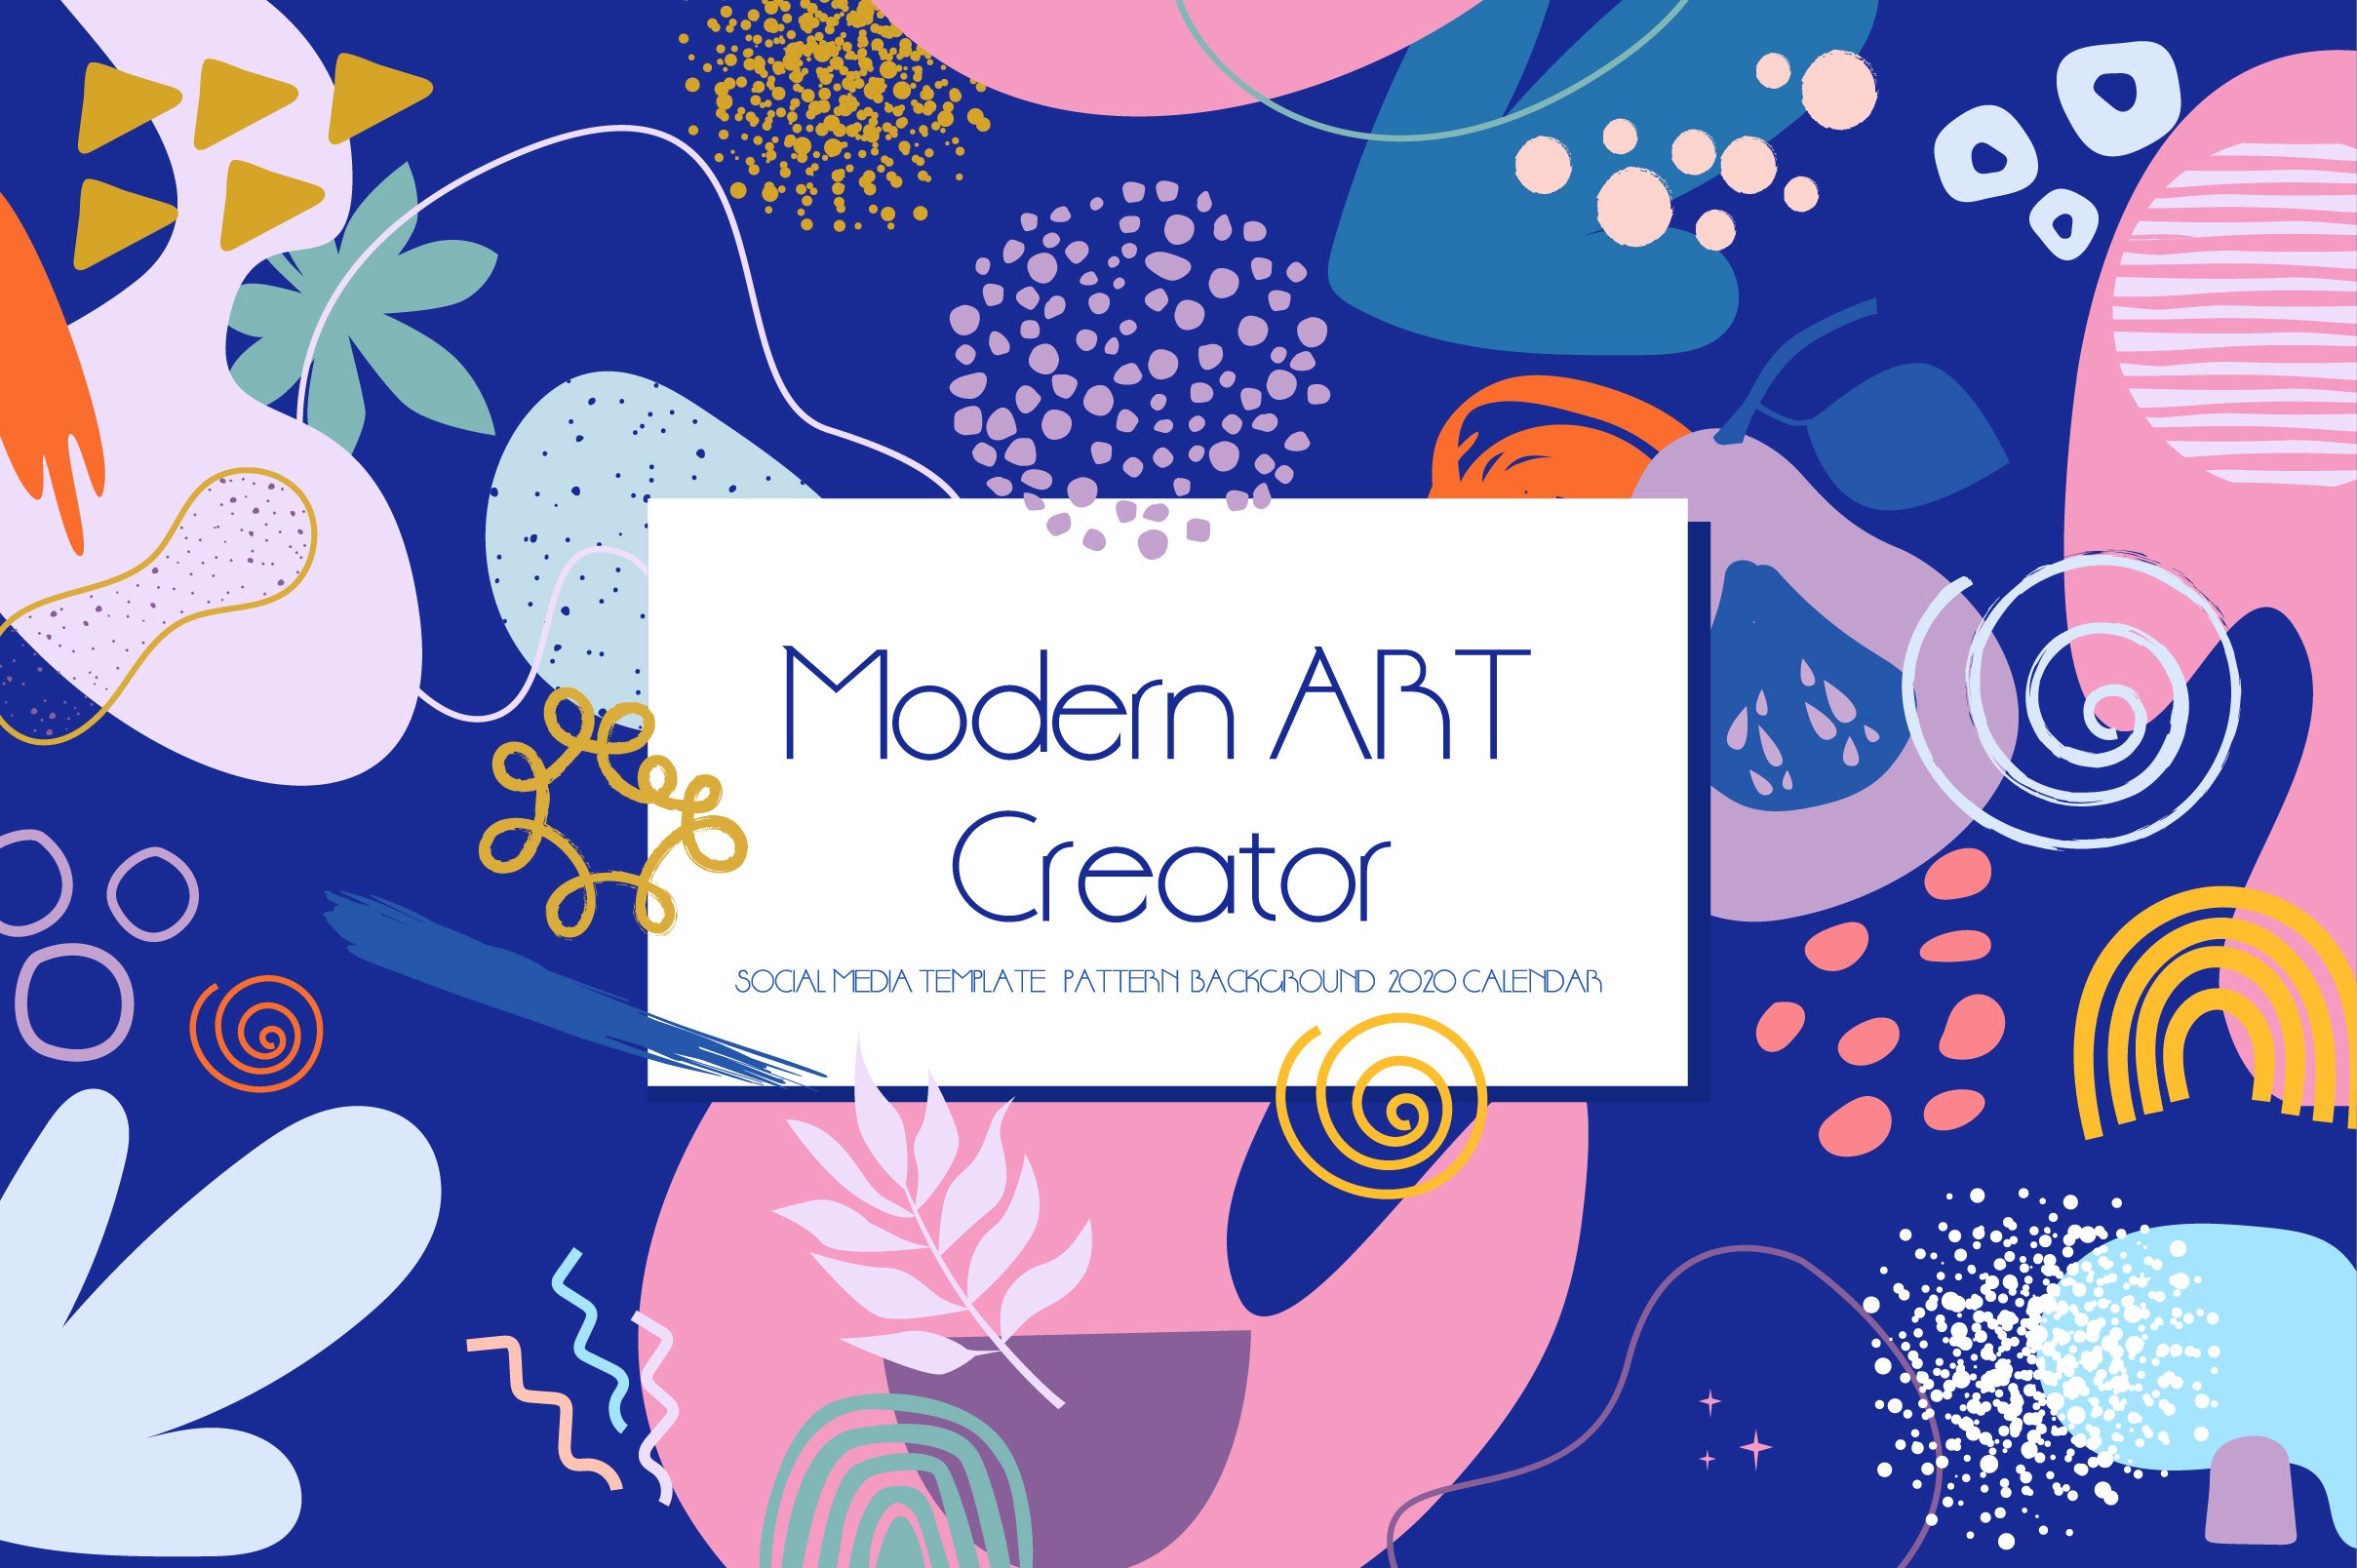 Moder ART Creator cover image.